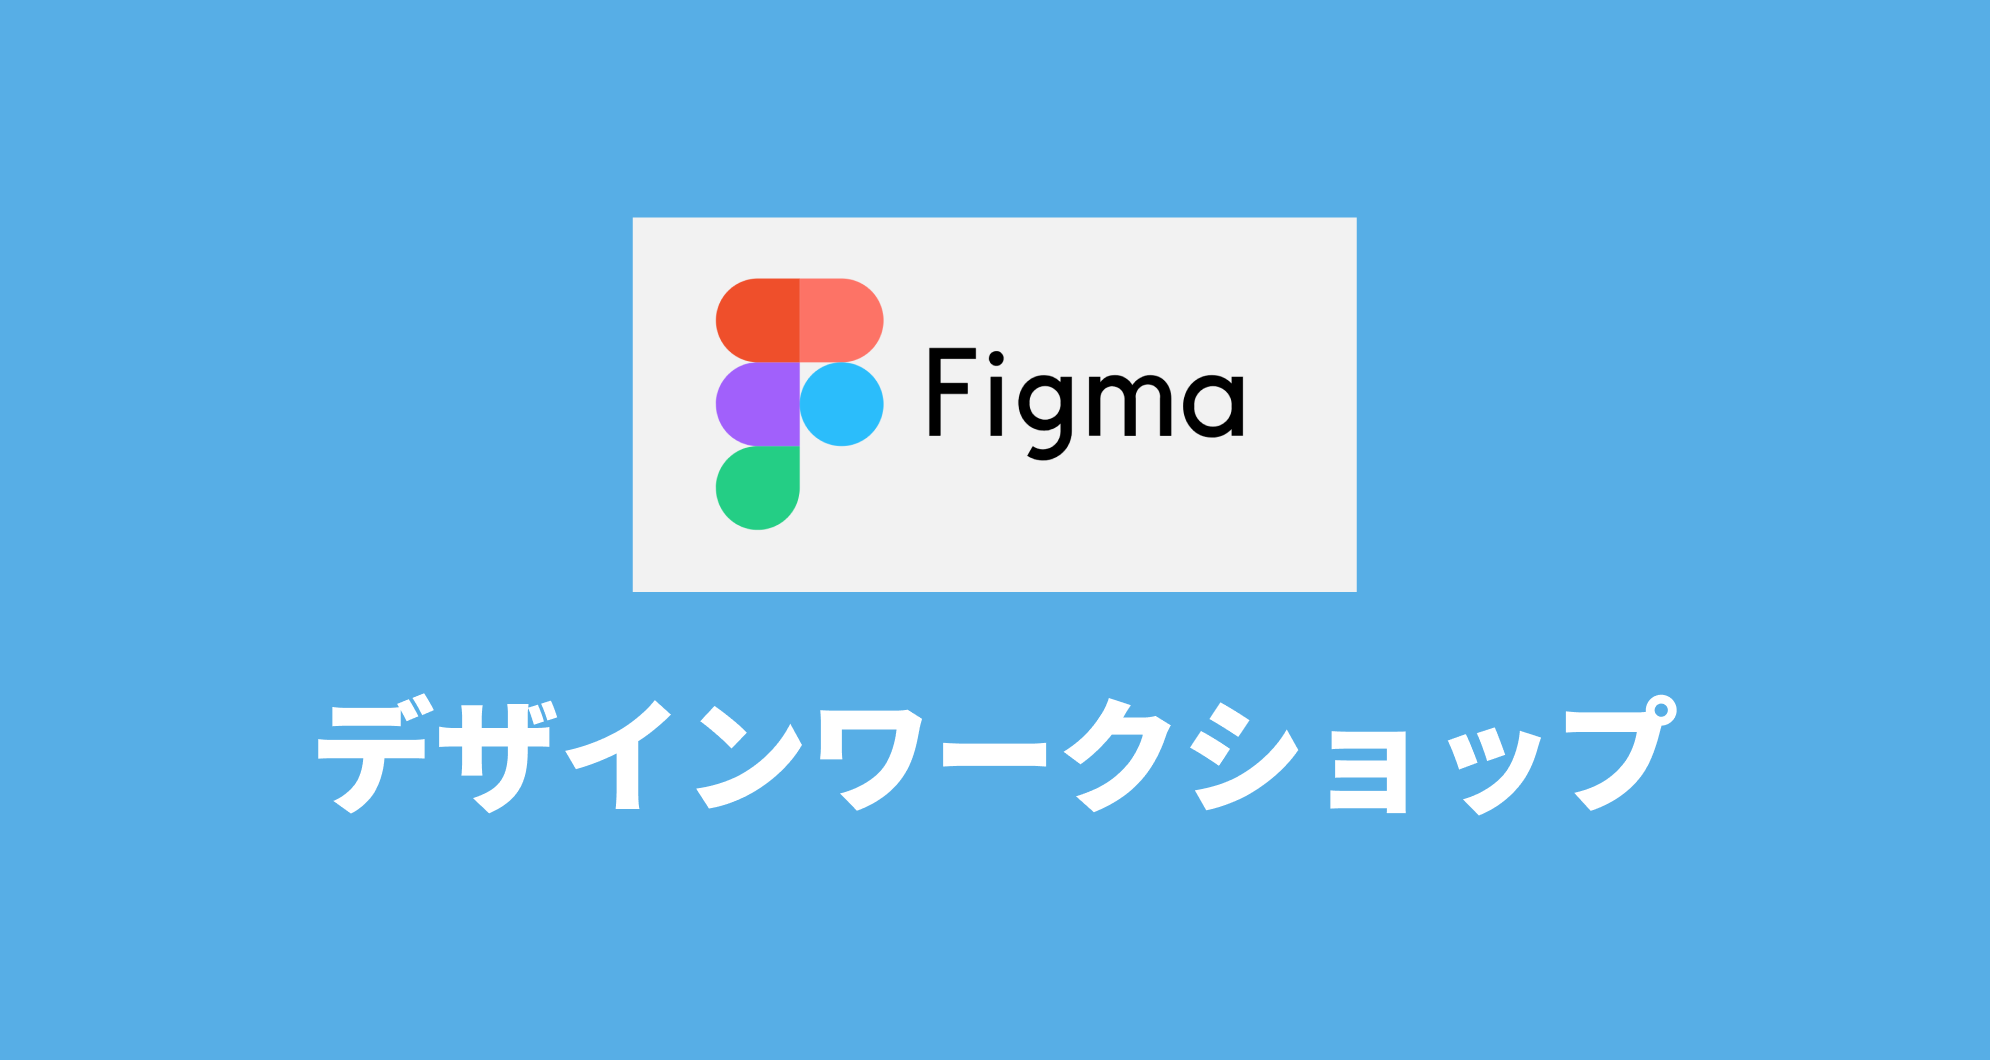 「Figmaデザインワークショップ」と書かれた画像。